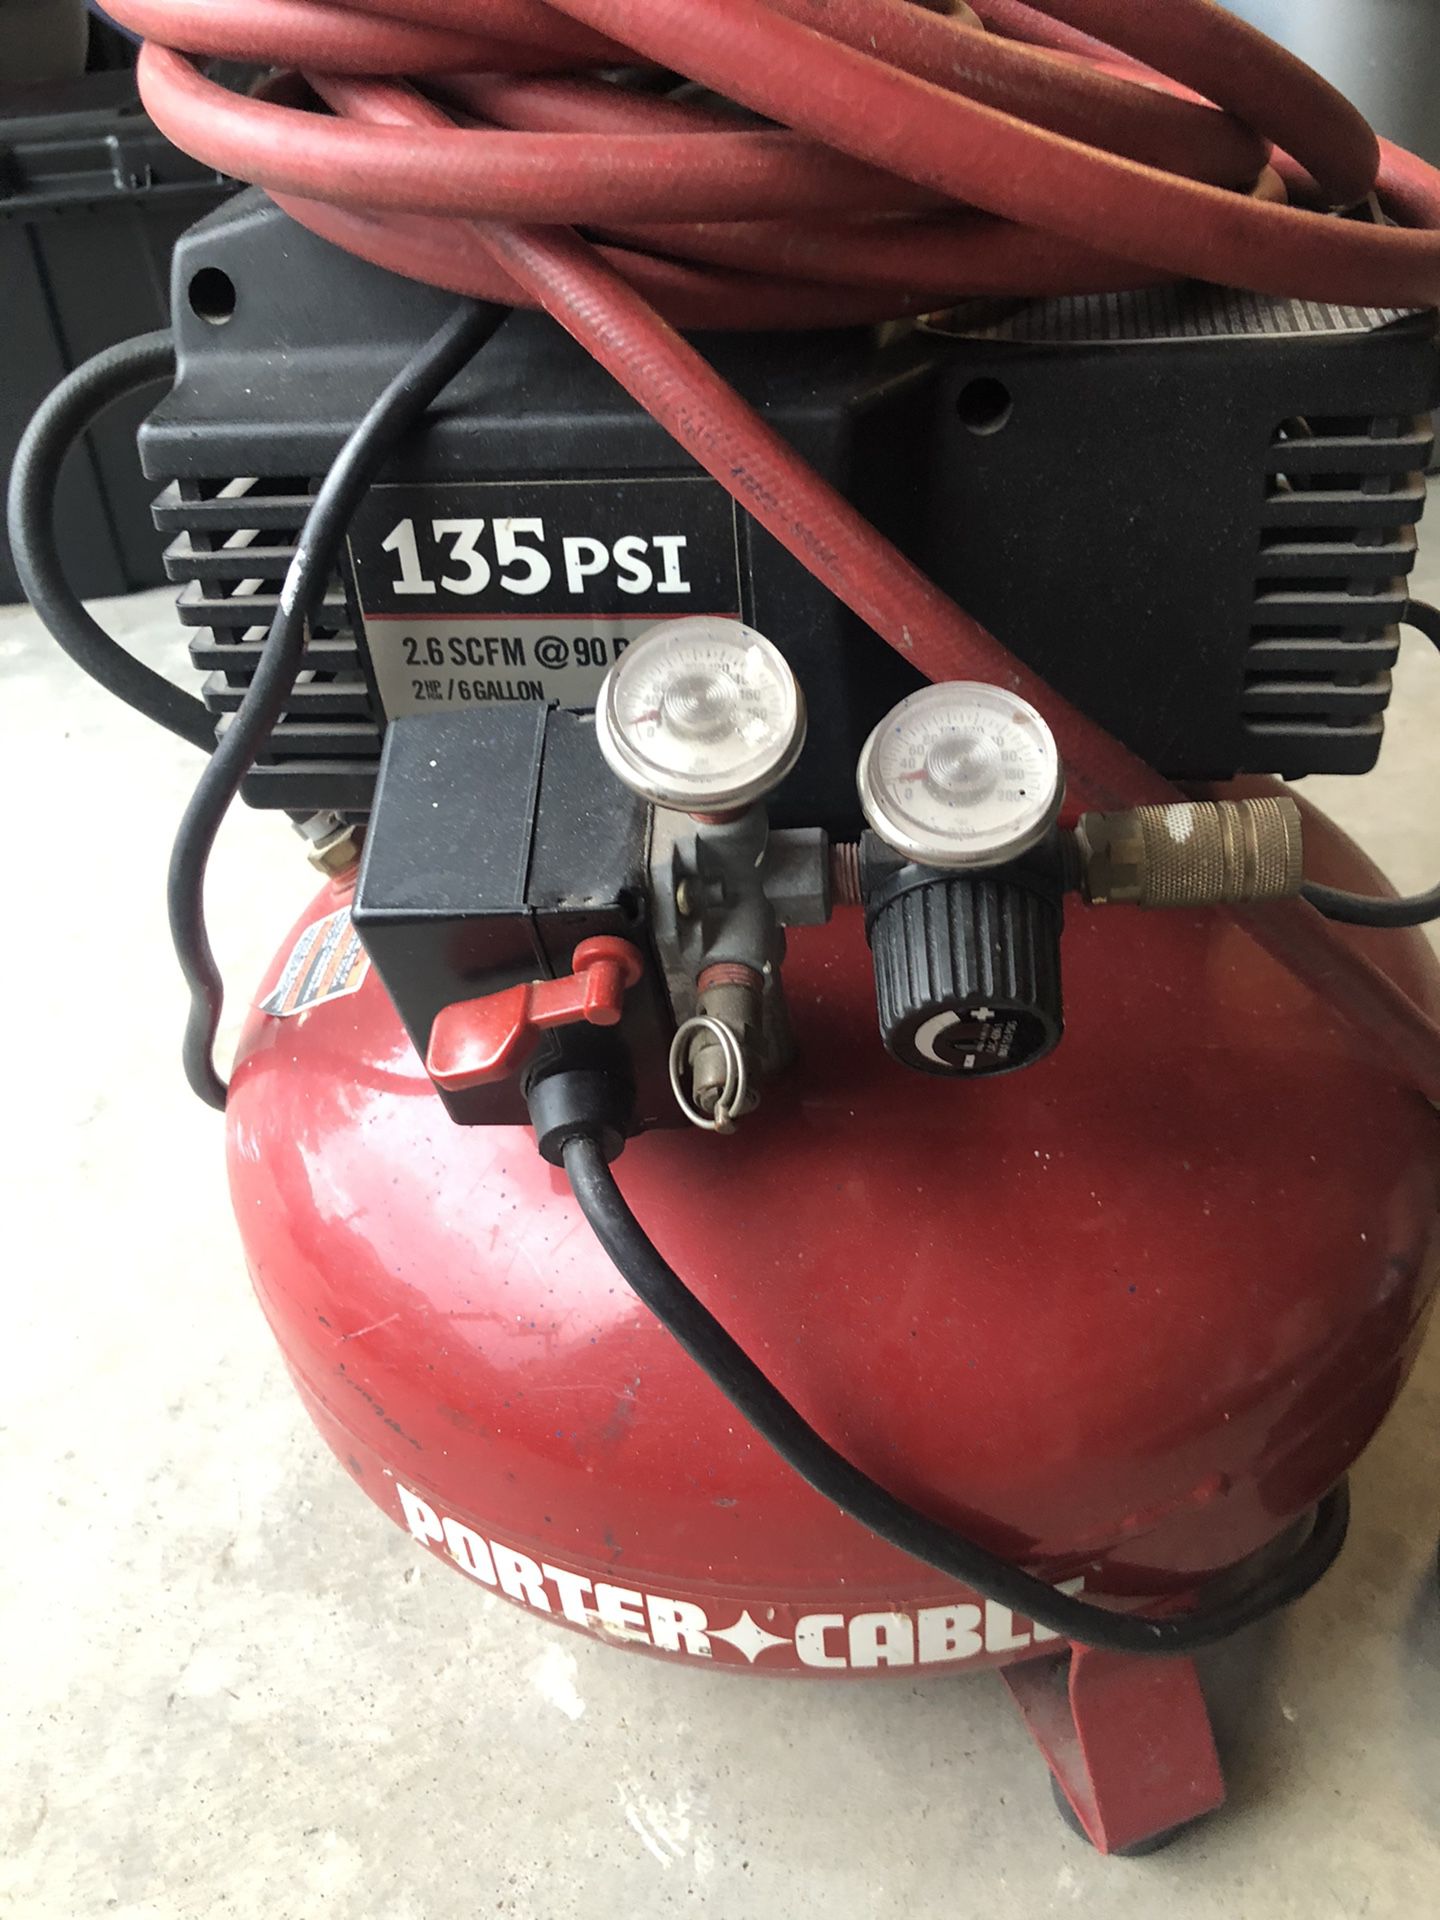 Porter cable 135 psi air compressor with hose